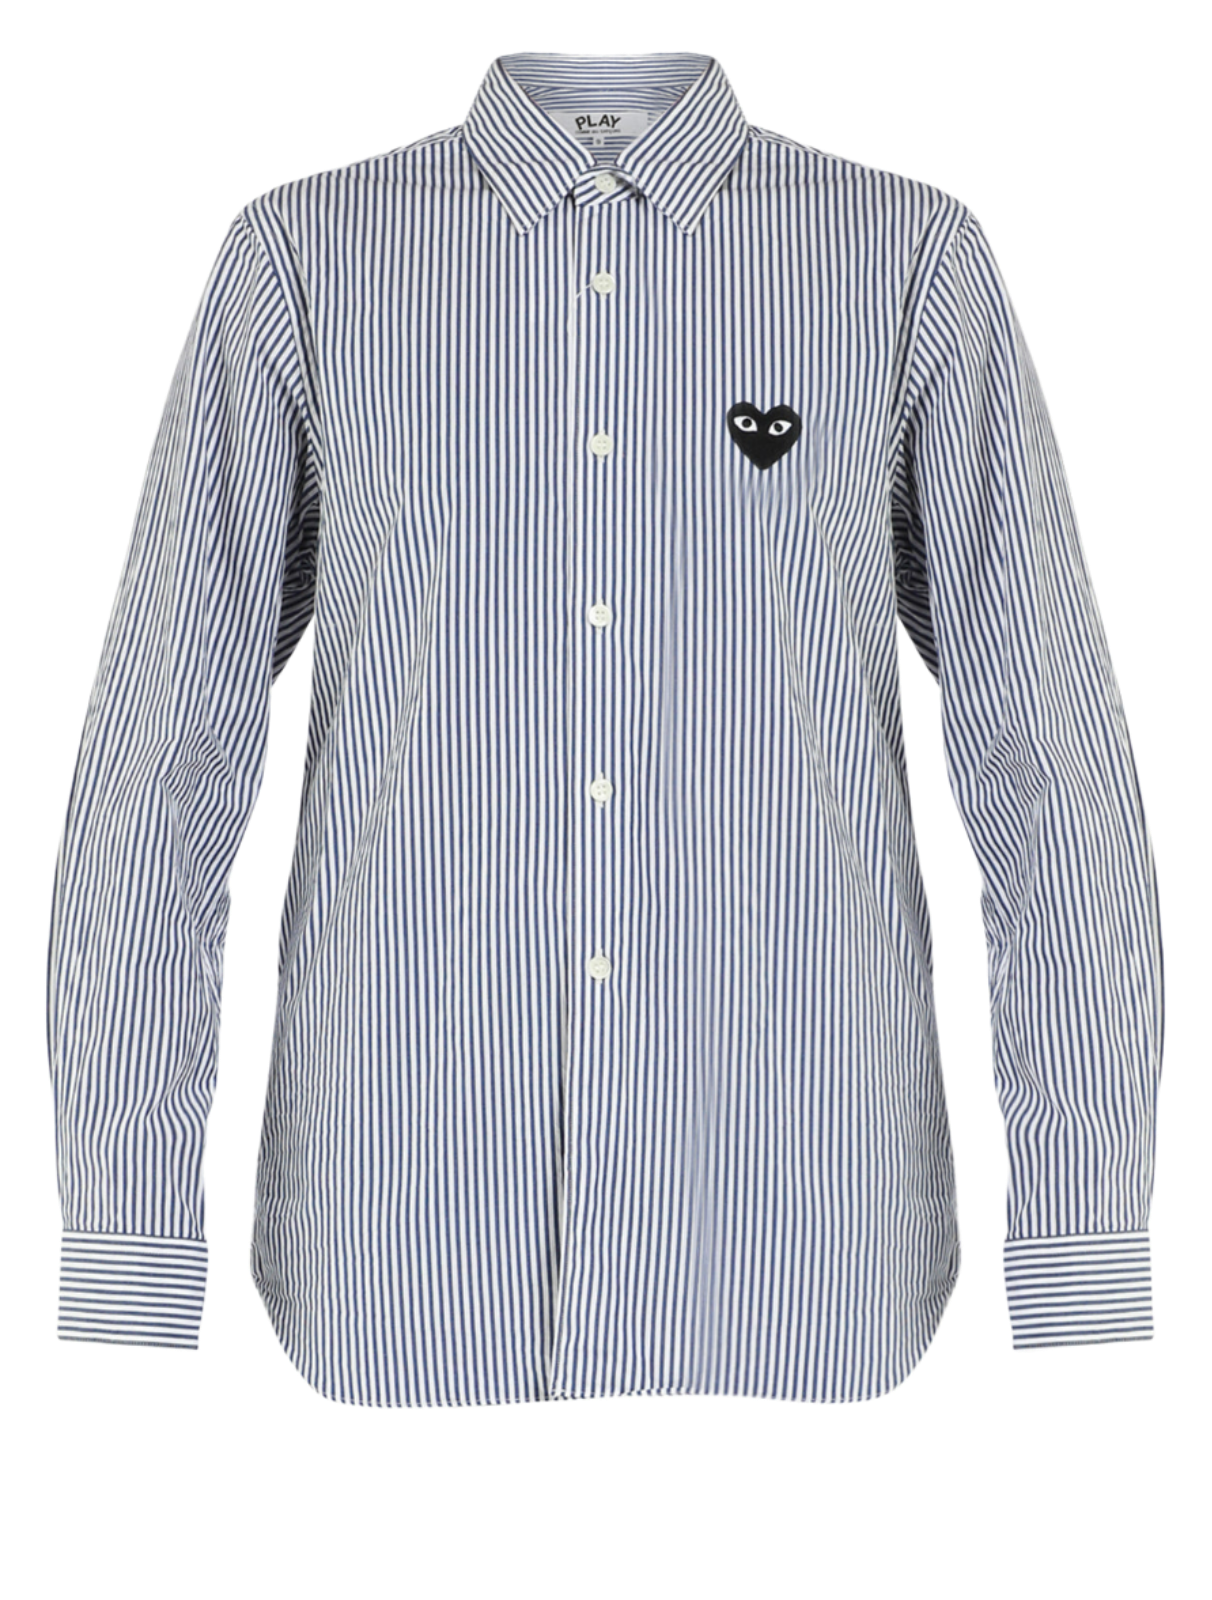 Men's Black Heart Striped Shirt